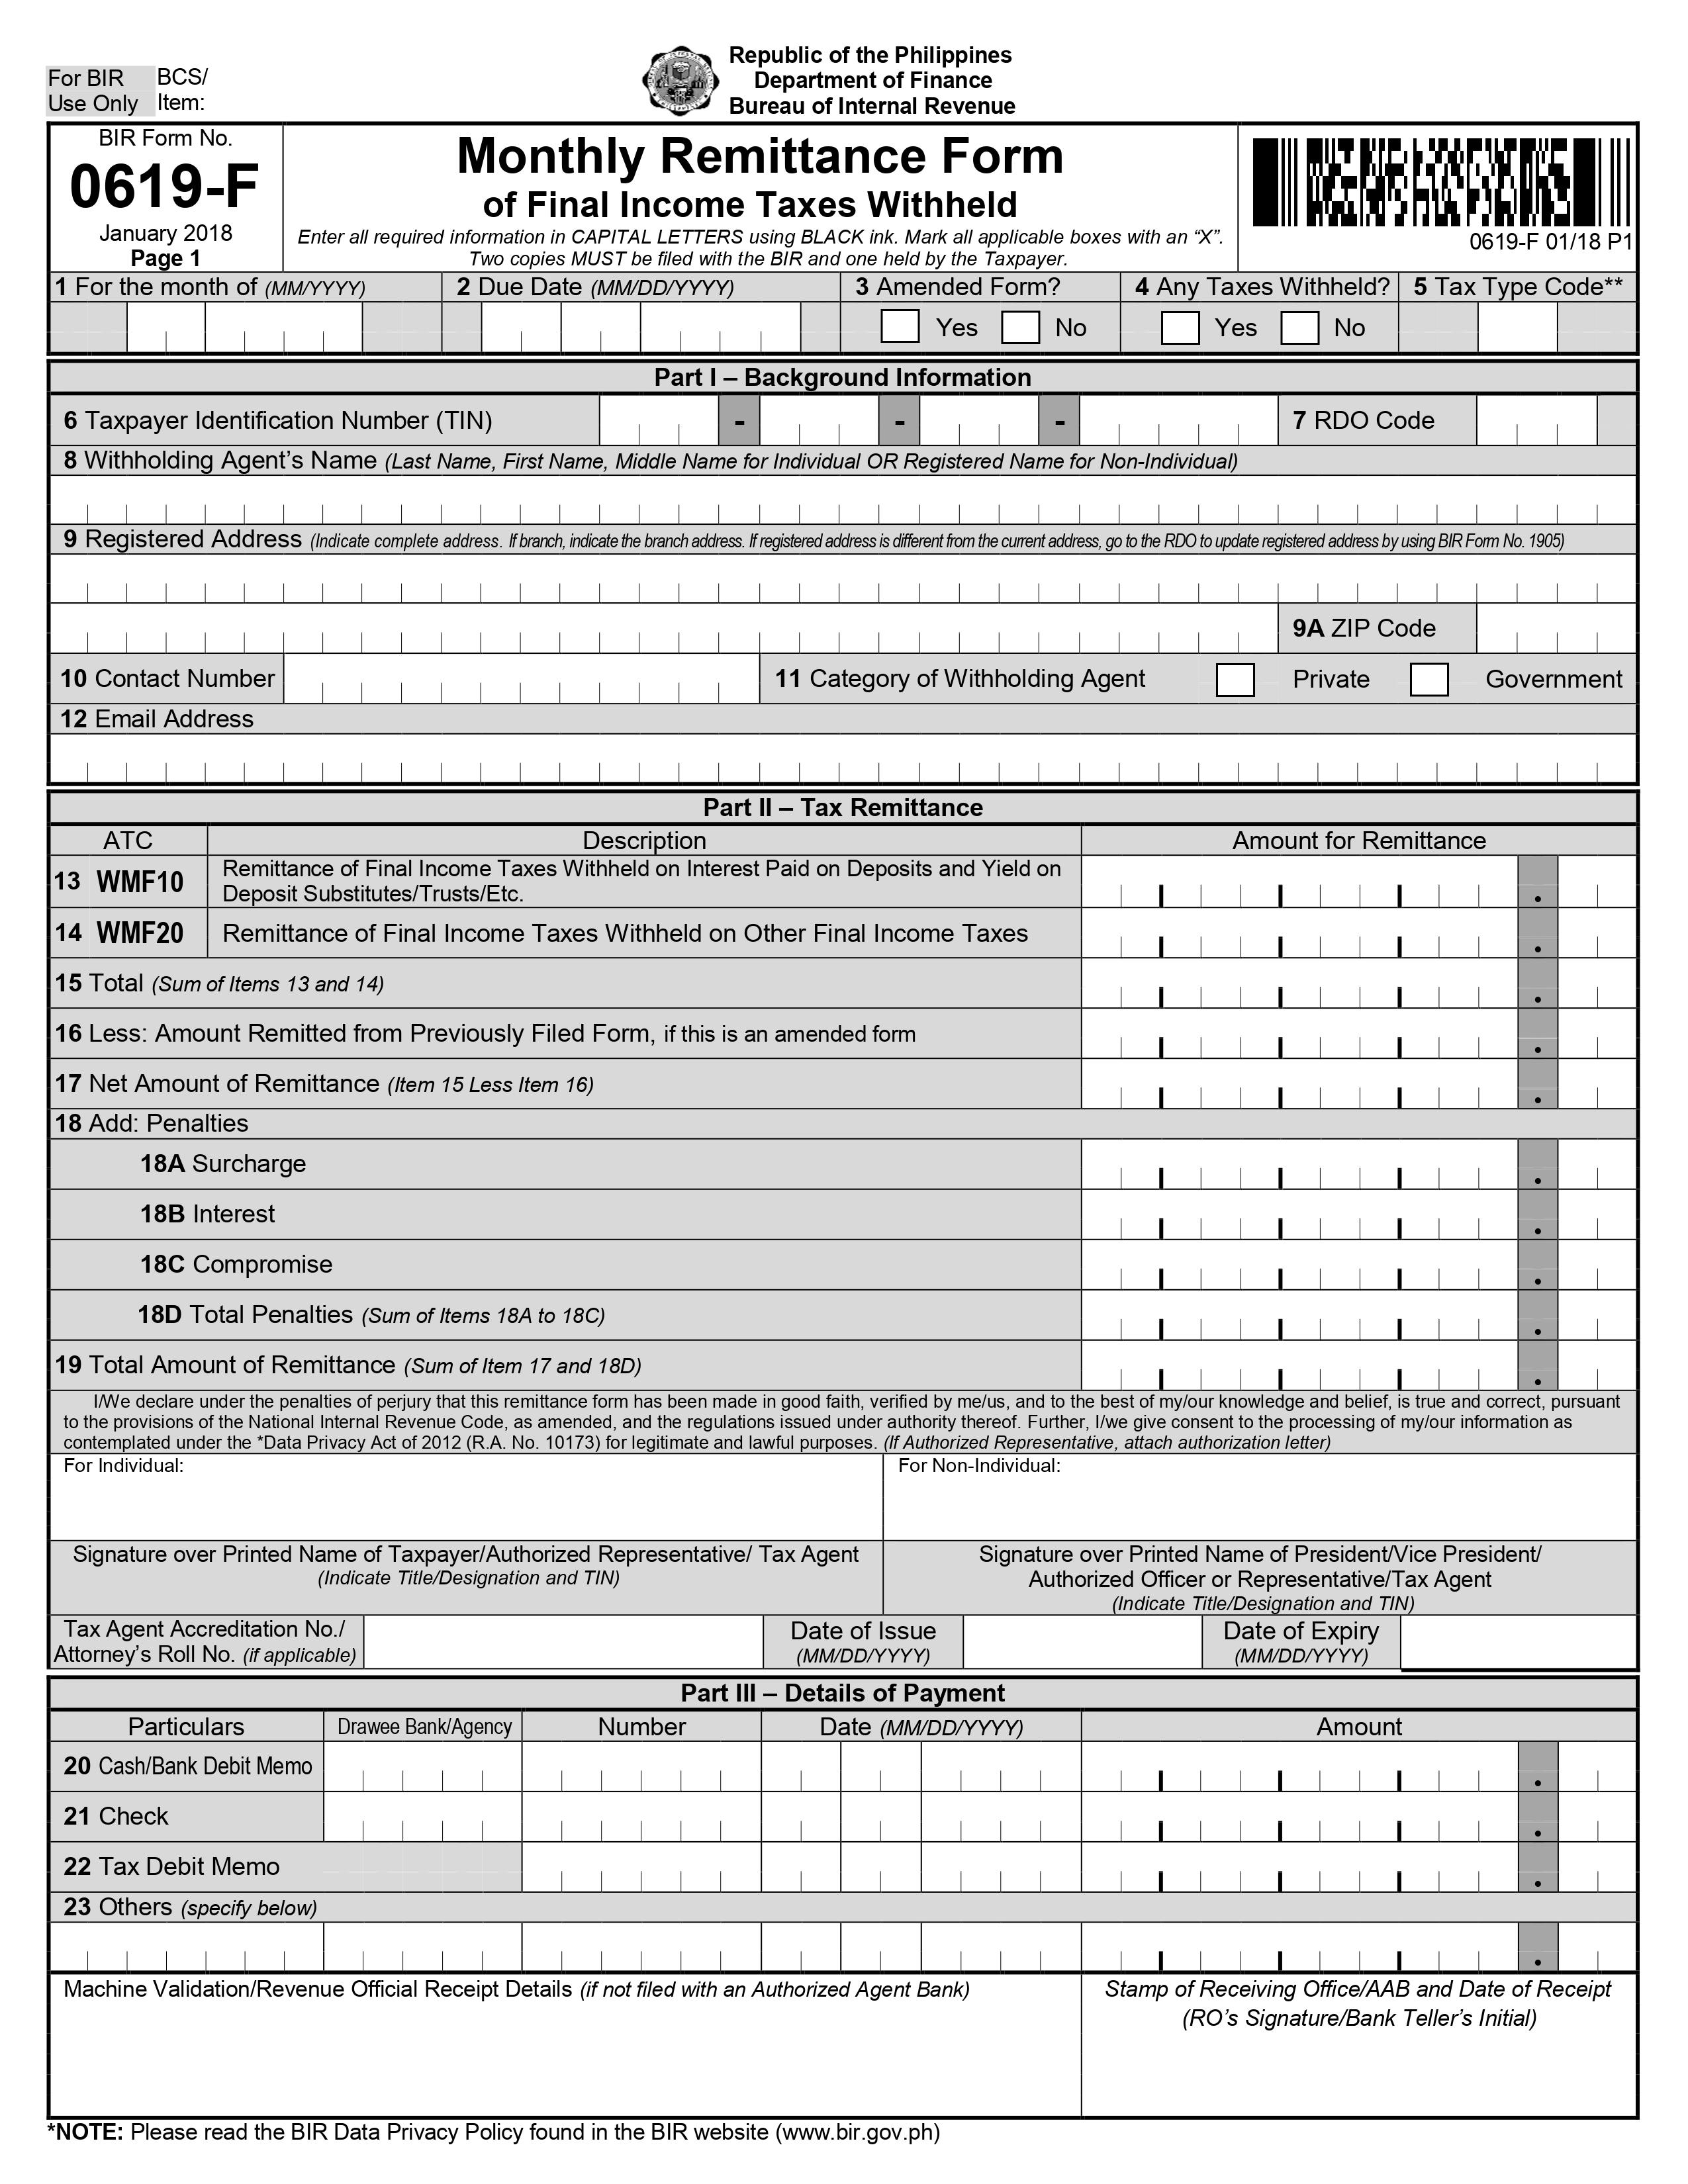 Monthly Remittance Form BIR Form 0619F